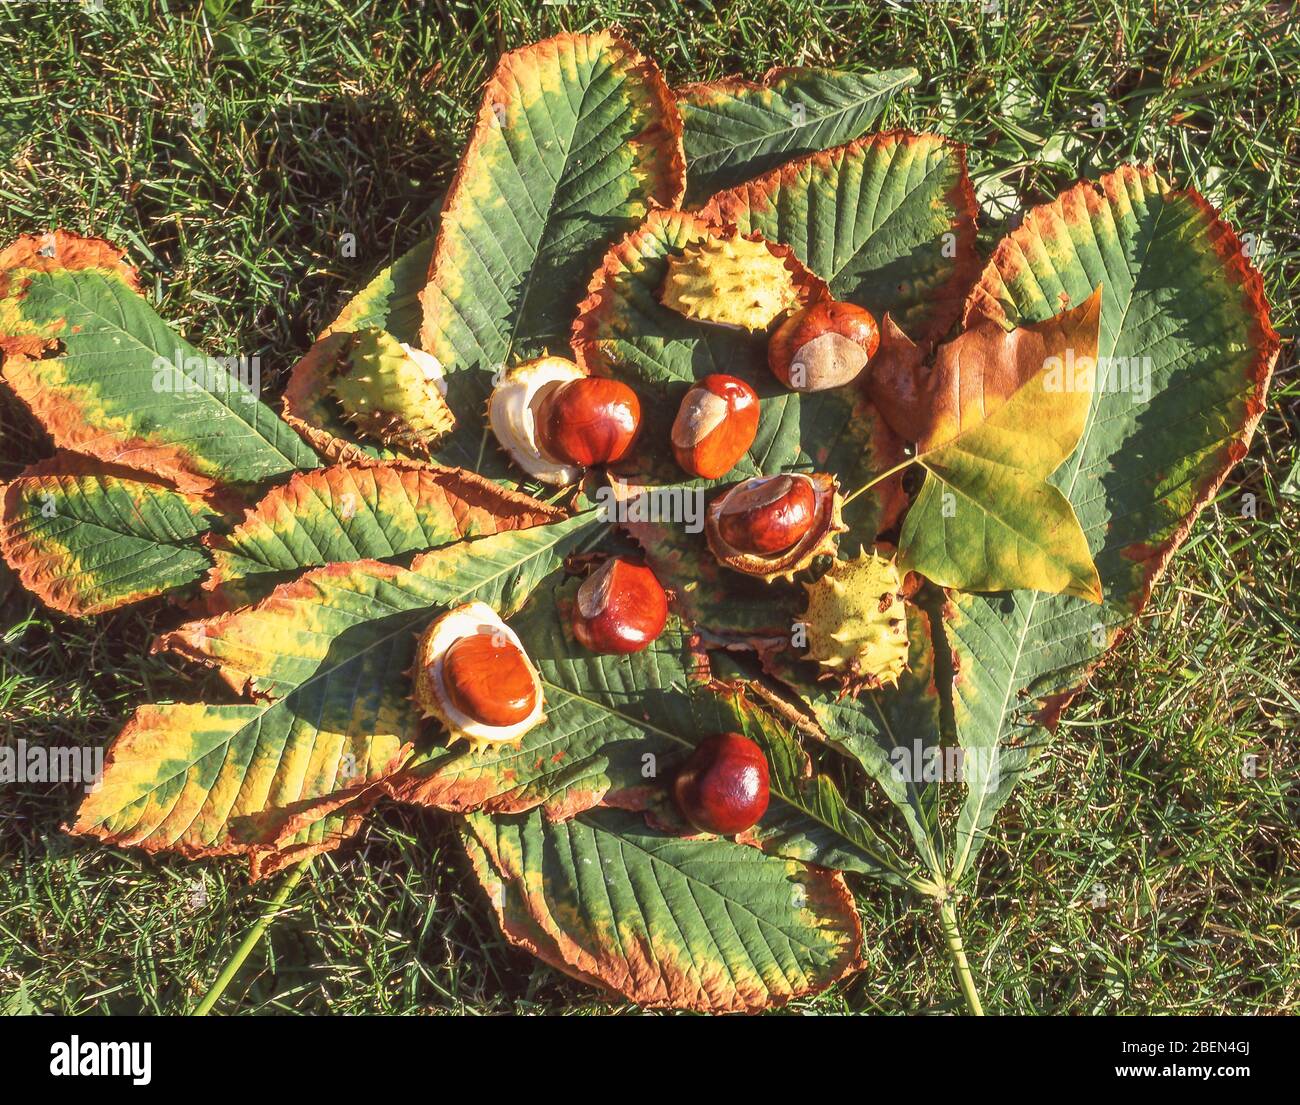 Sweet chestnuts (Castanea sativa) lying on autumn leaves, West Sussex, England, United Kingdom Stock Photo